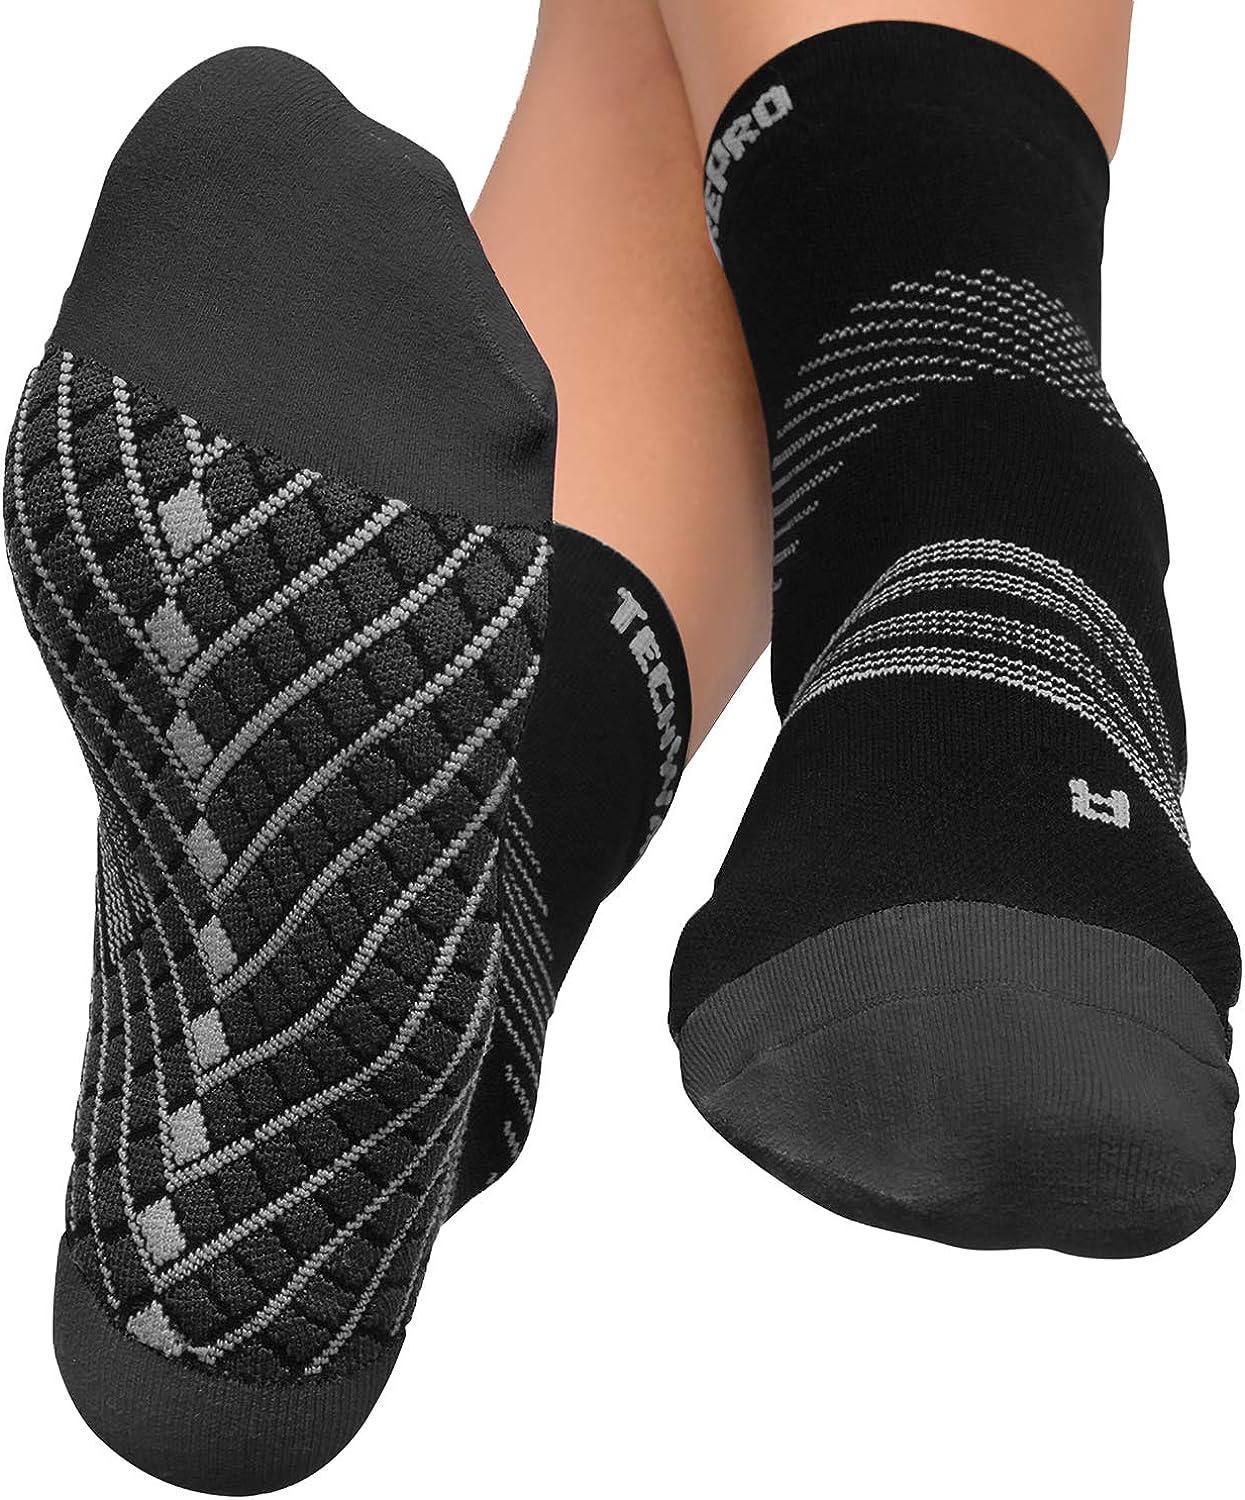 Mojo Compression Socks Mojo Compression Foot Socks for Plantar Fasciitis -  Firm Graduated Support - M806